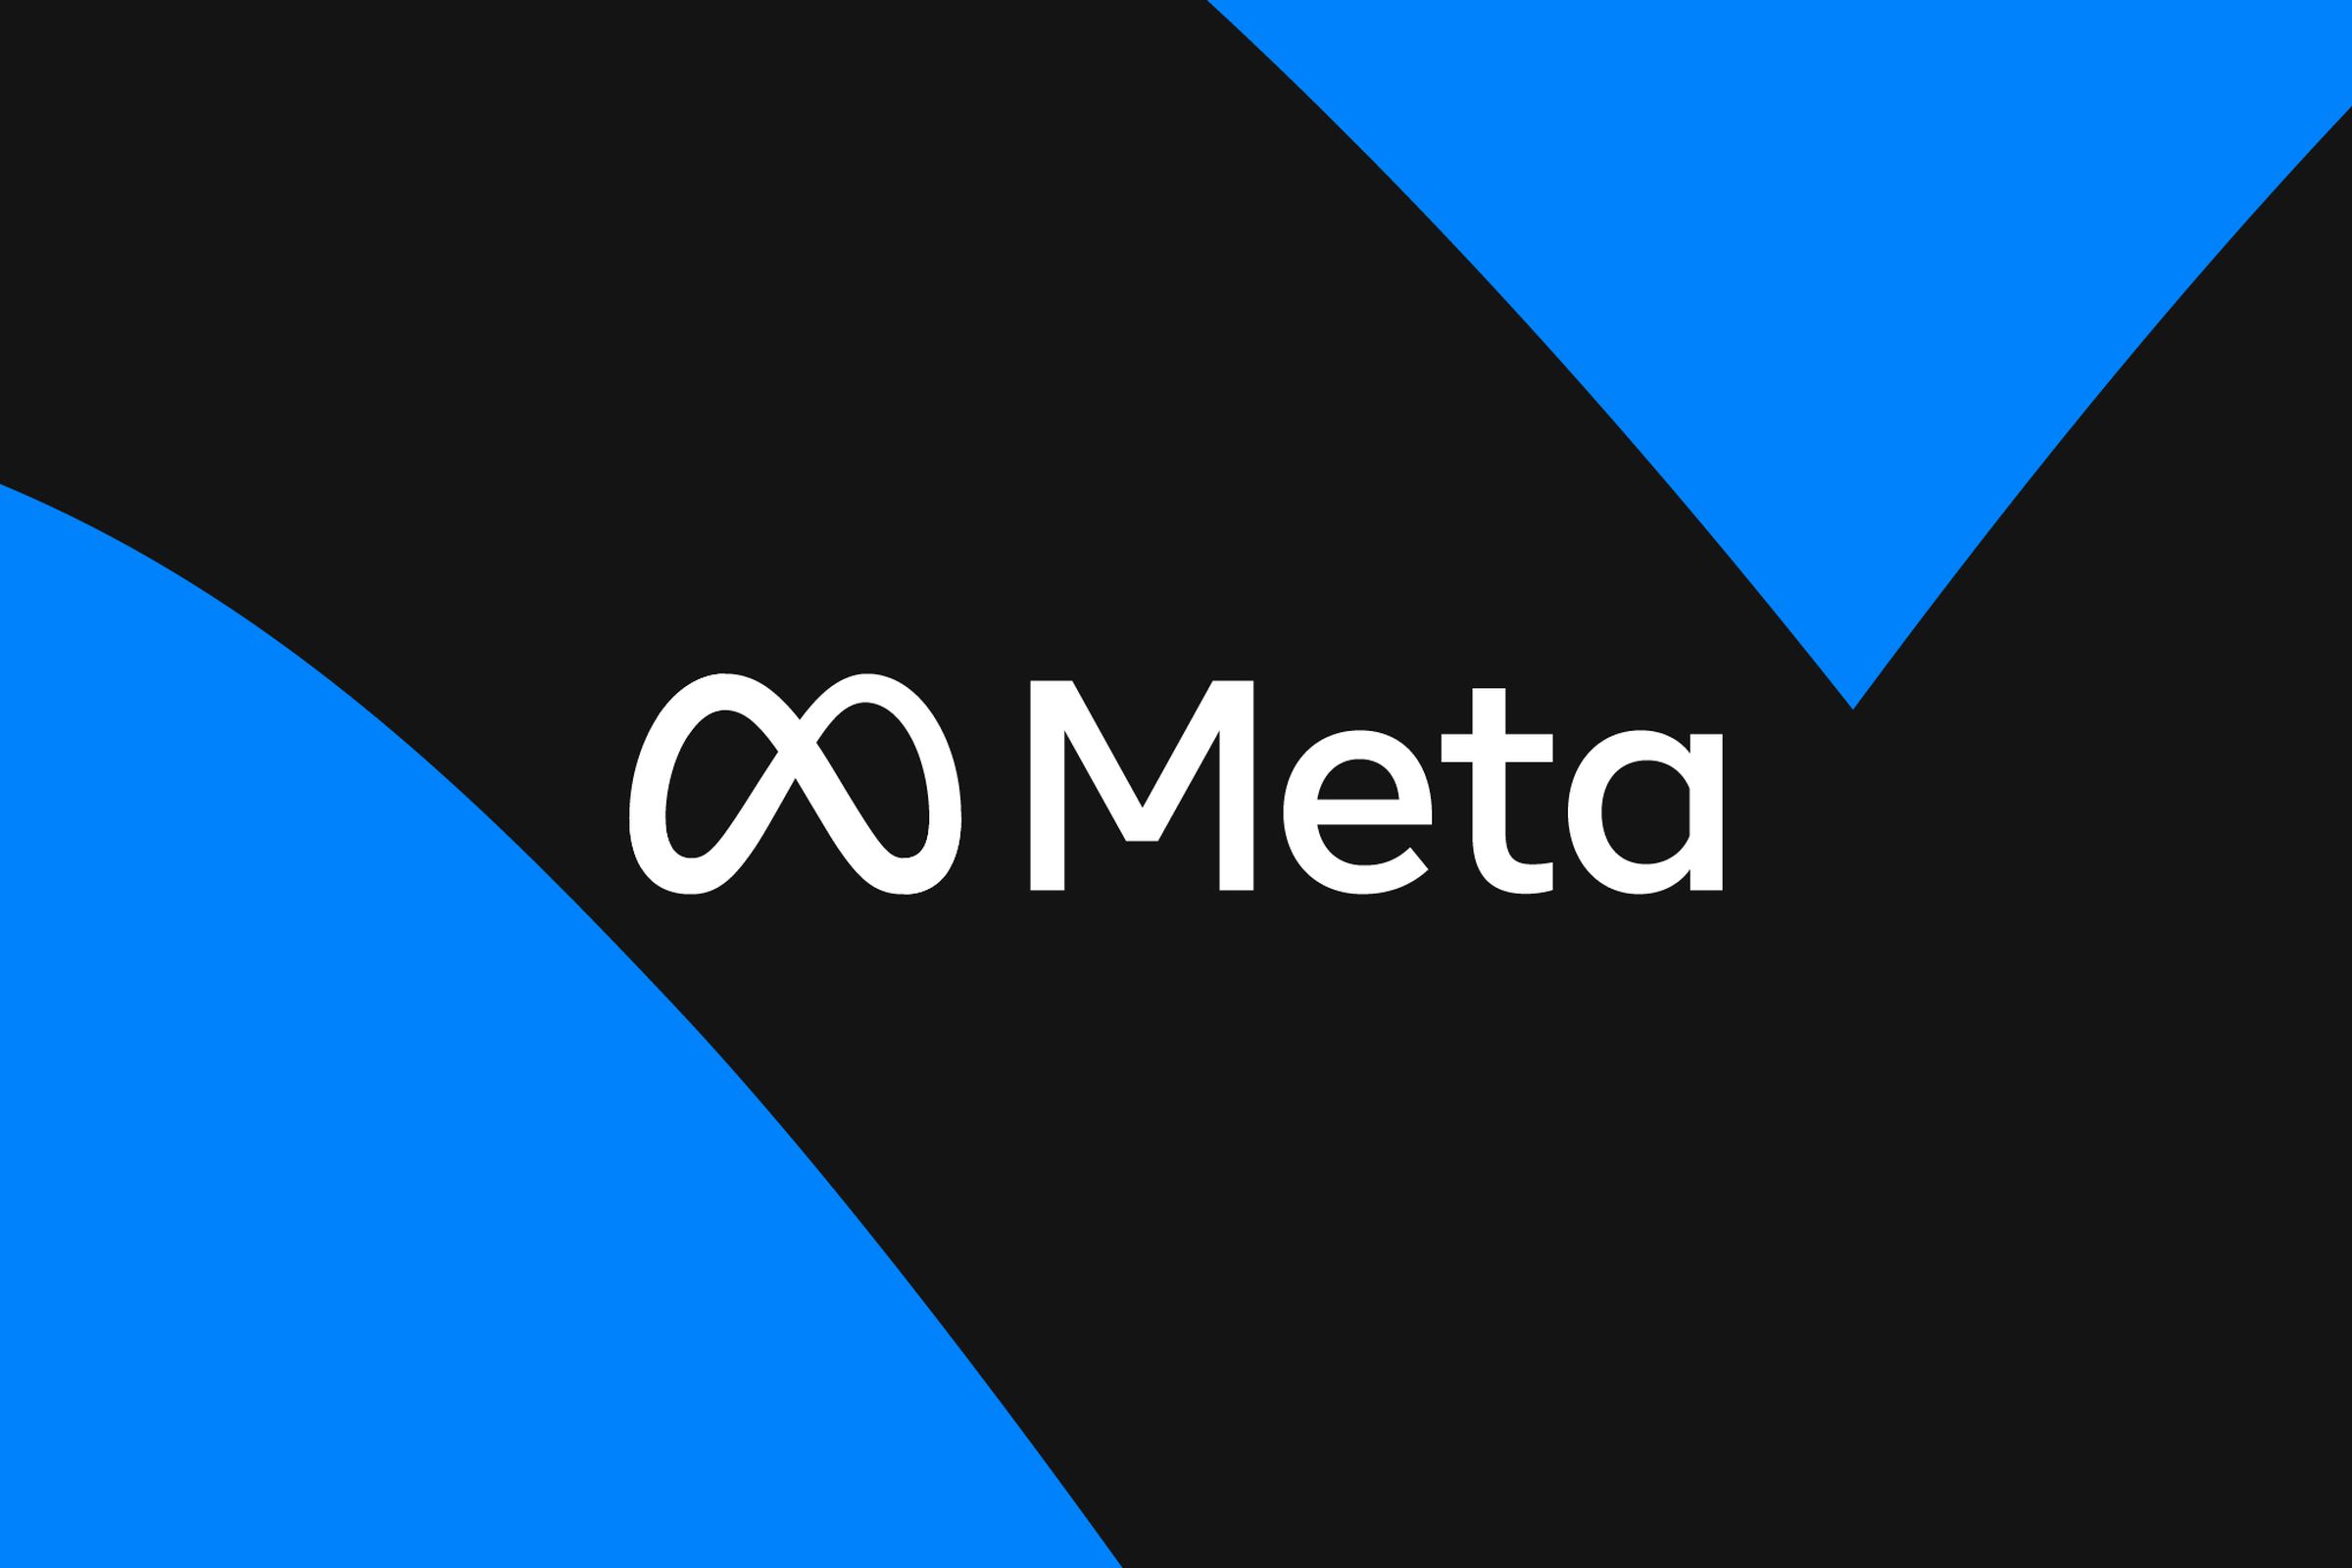 Vector illustration of the Meta logo.